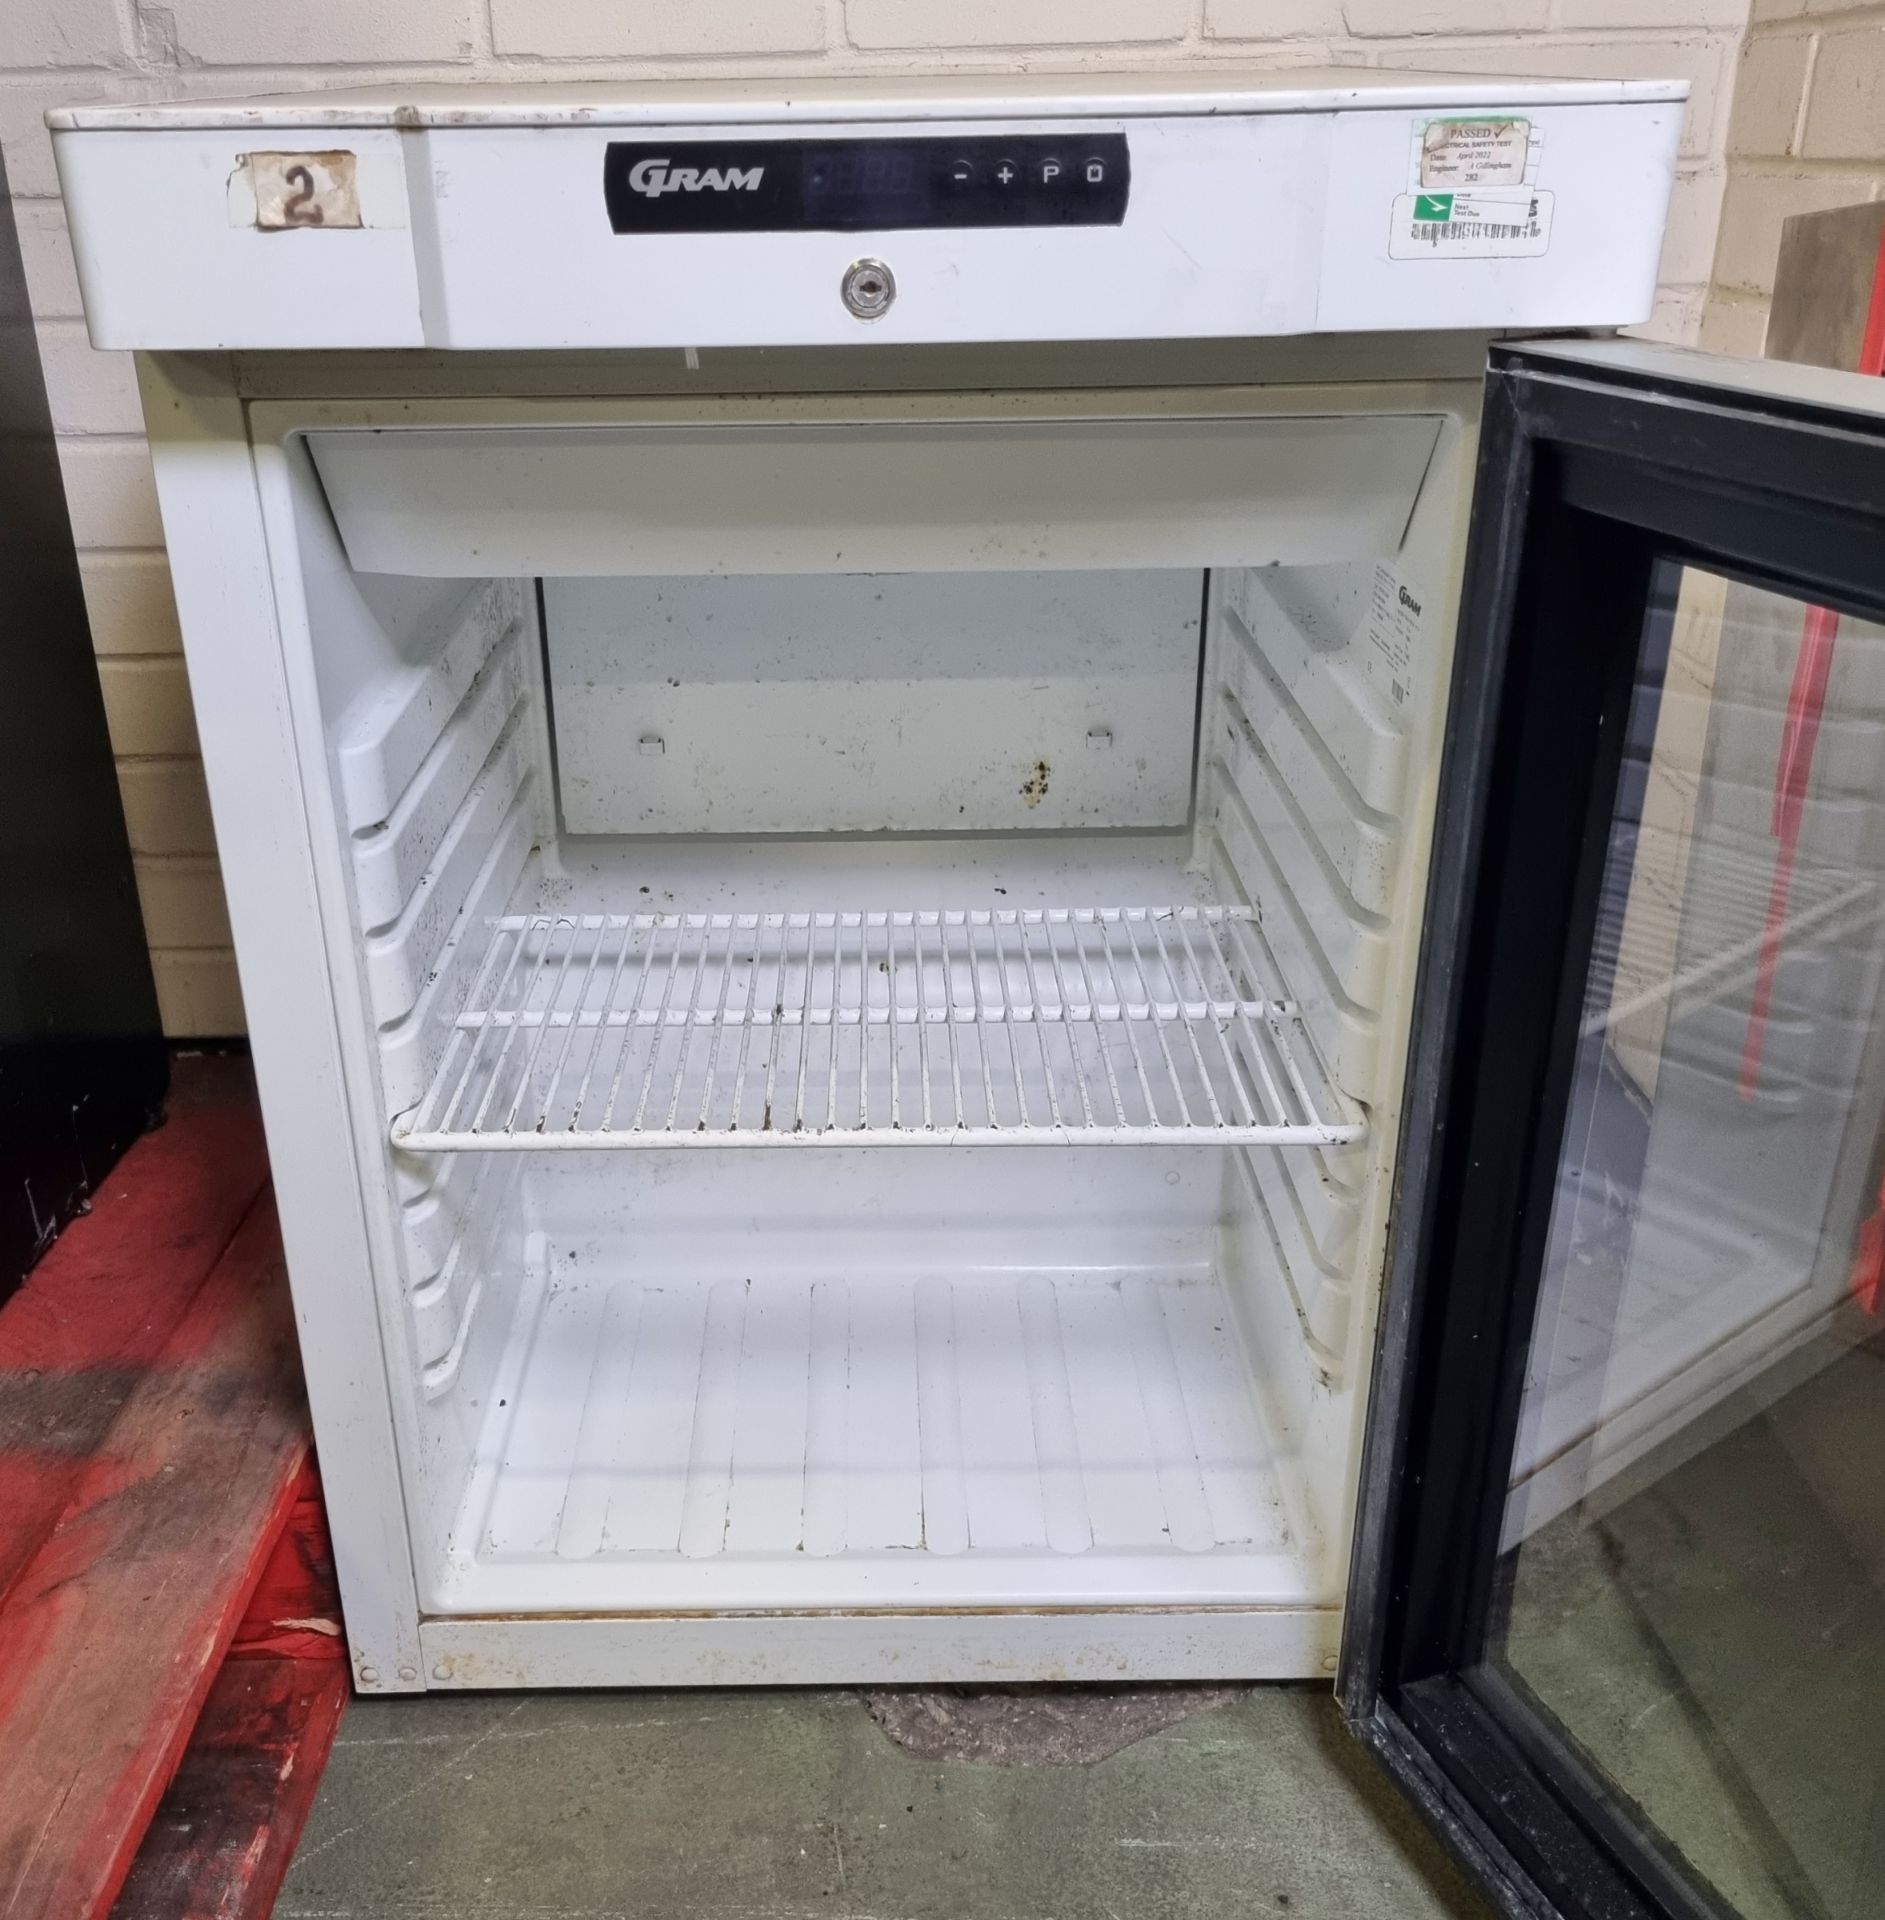 Gram KG 210 LG 3W undercounter fridge - 67 x 60 x 82cm - Image 4 of 5